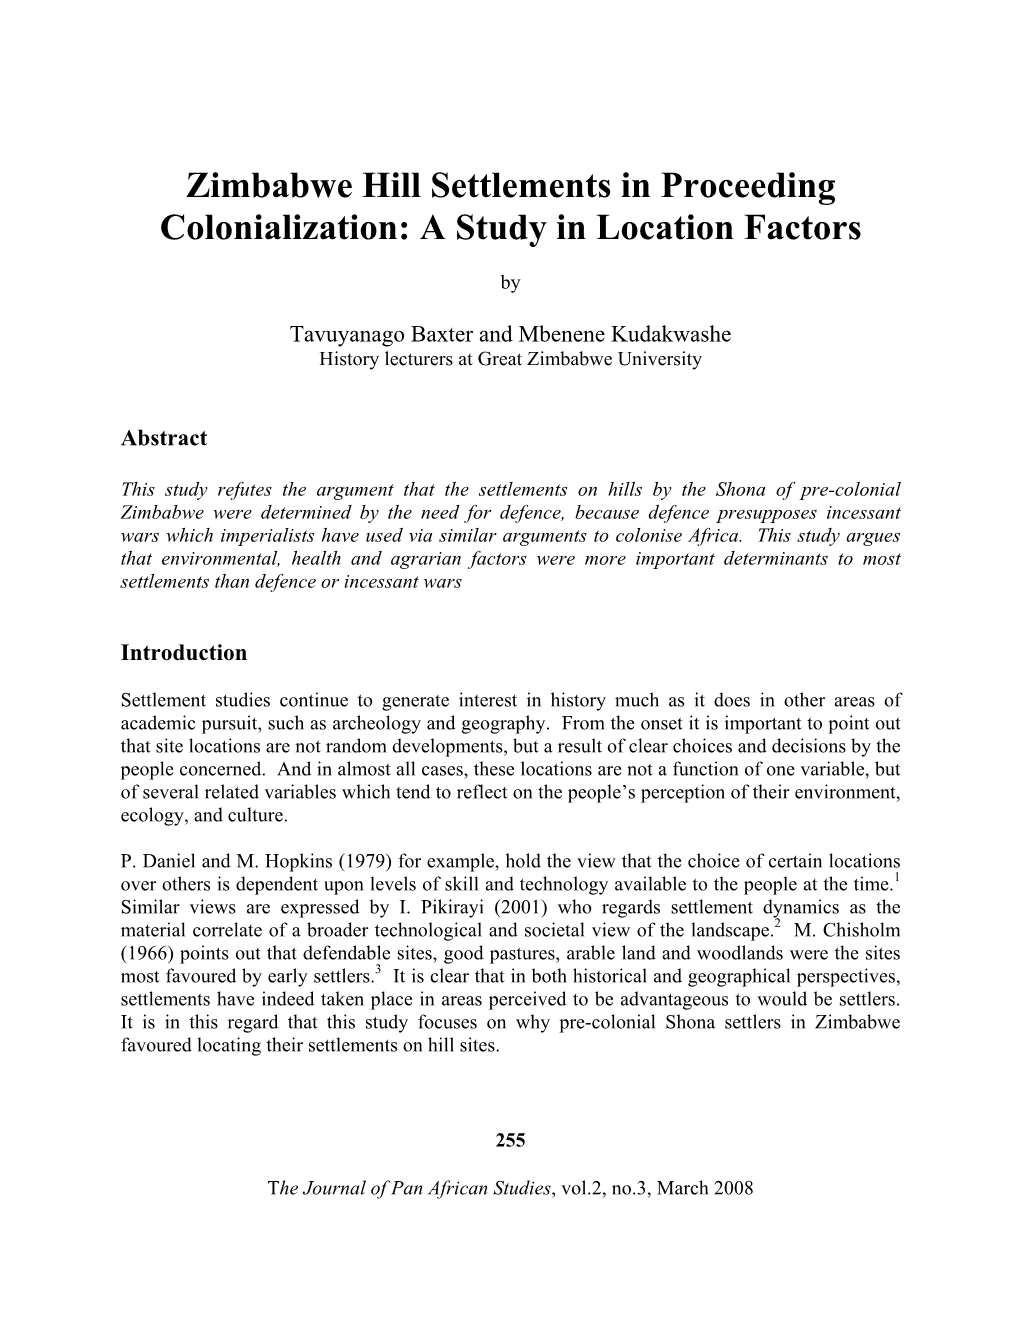 Zimbabwe Hill Settlements in Proceeding Colonialization: a Study in Location Factors